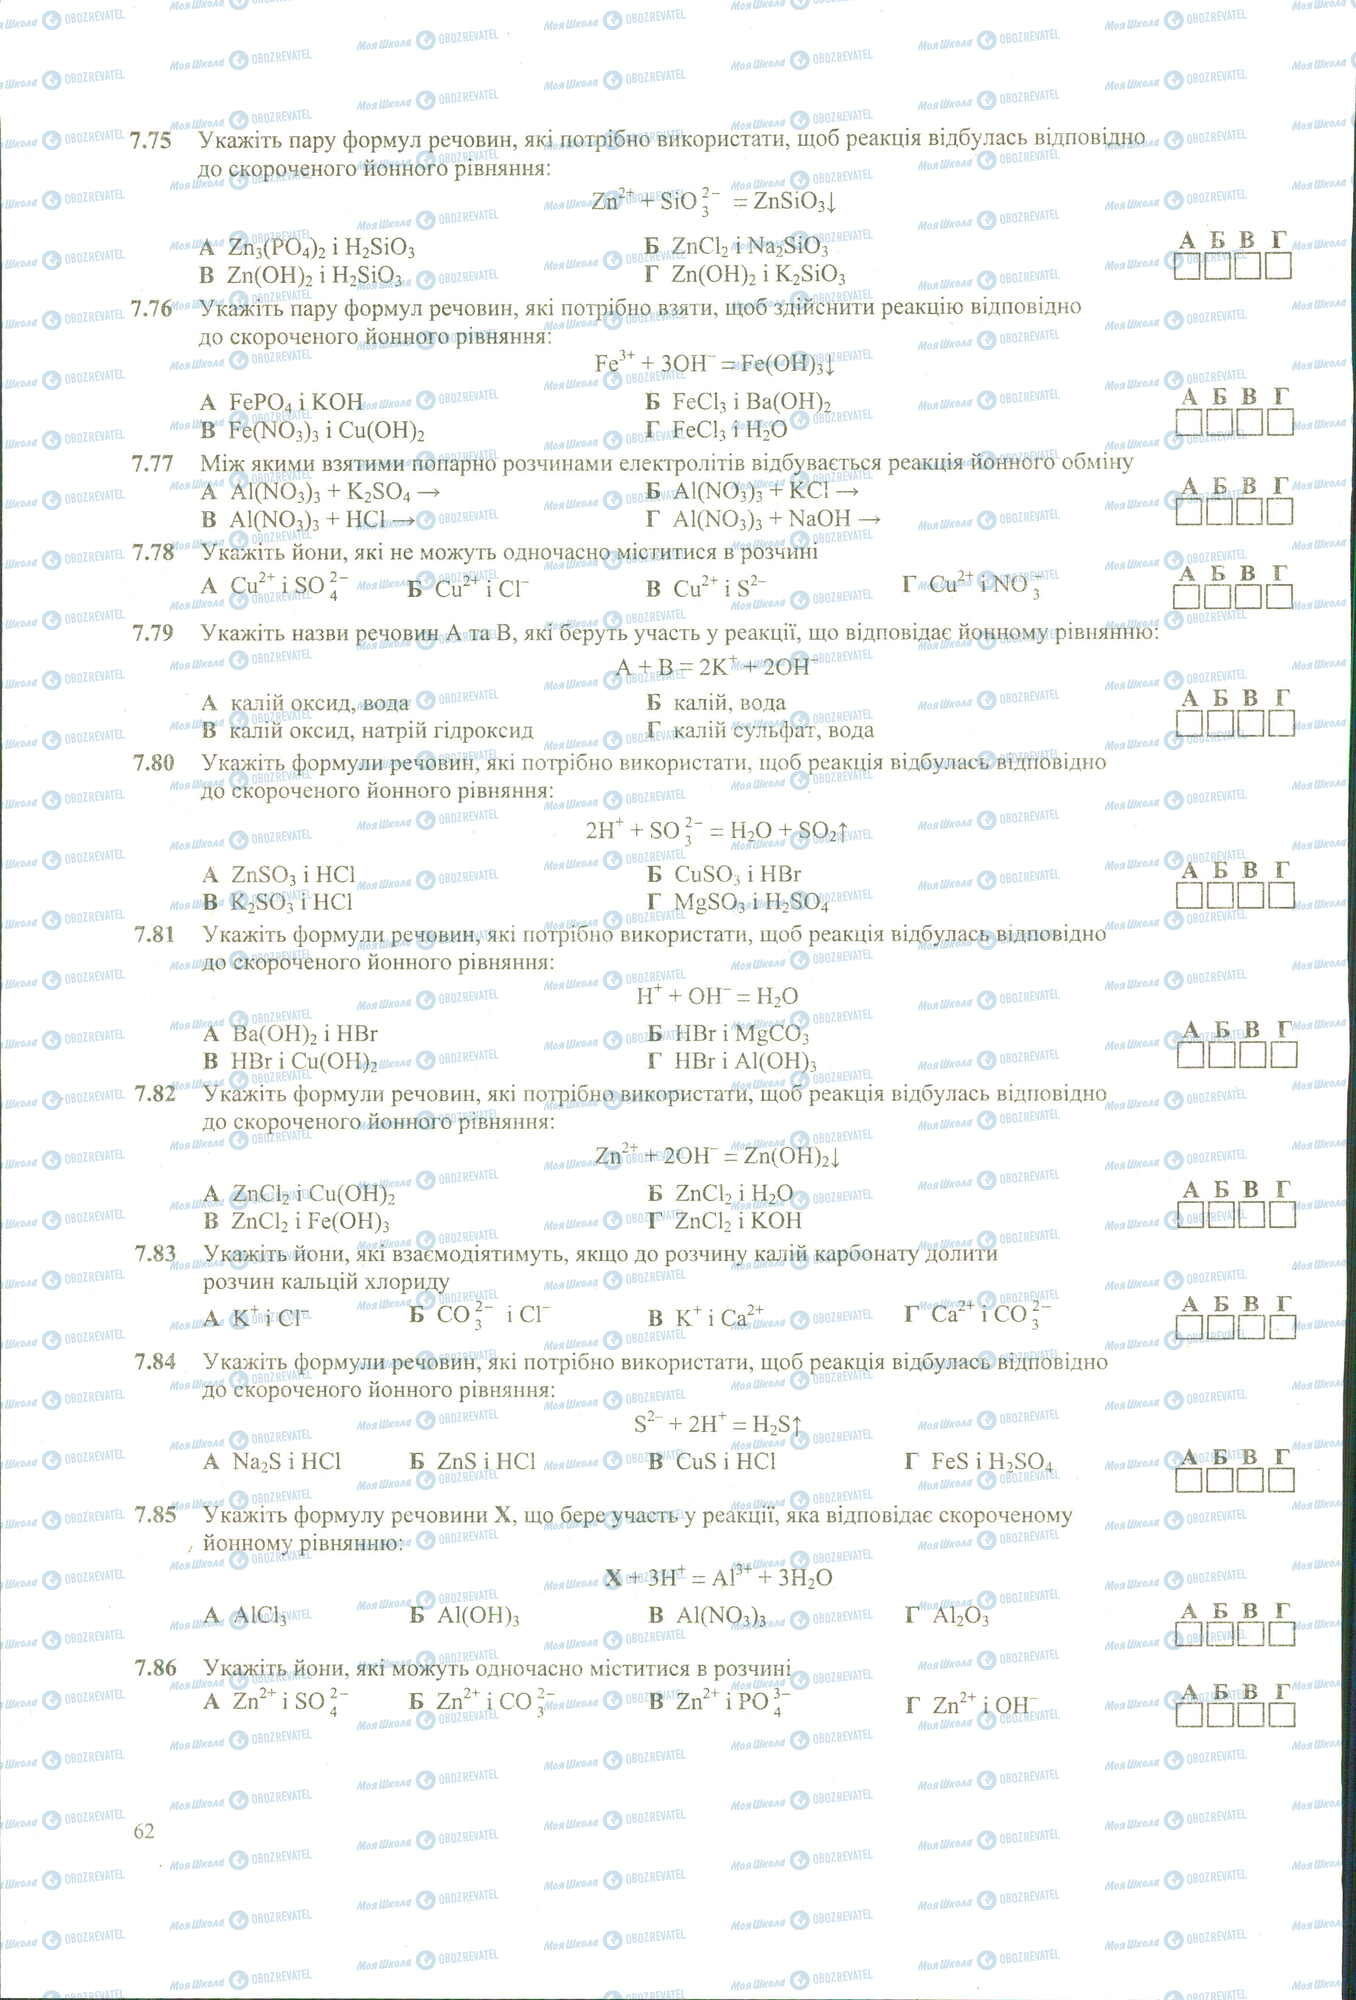 ЗНО Химия 11 класс страница 75-86